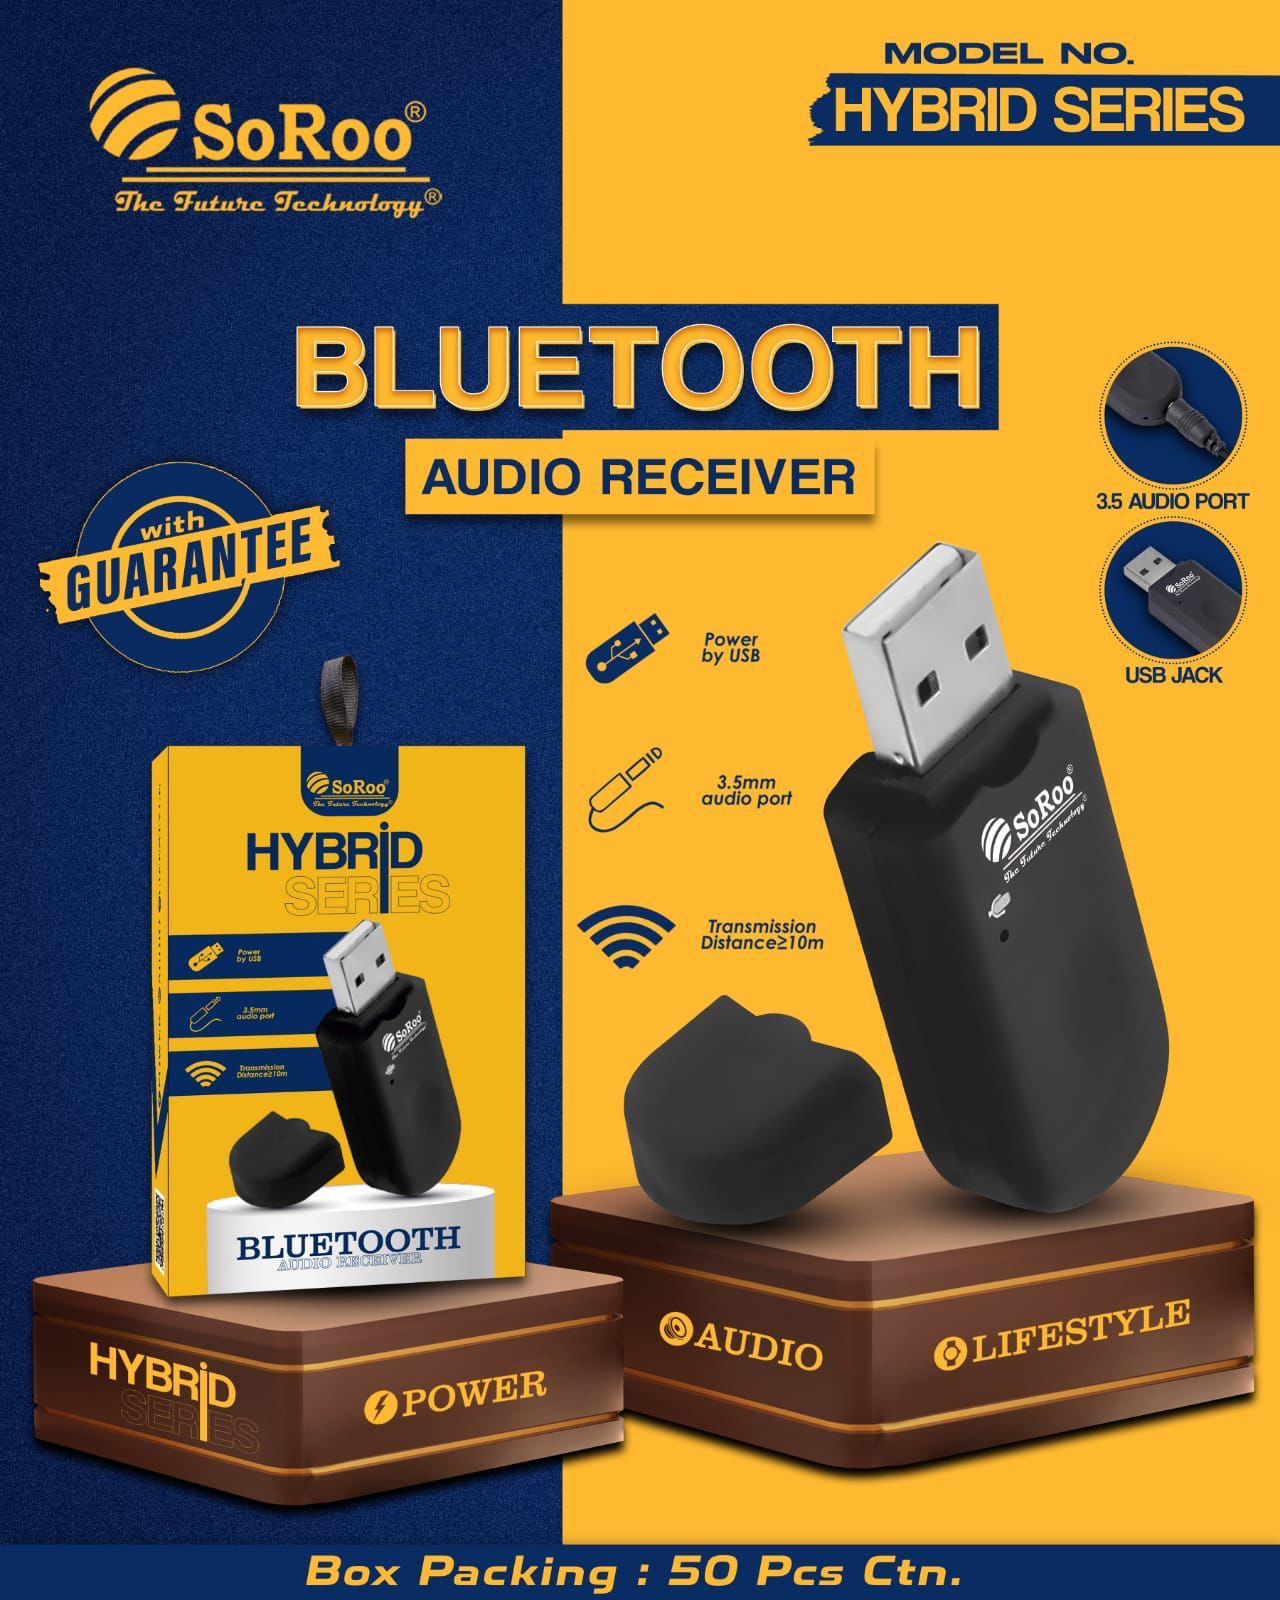 Soroo Bluetooth Audio Receiver